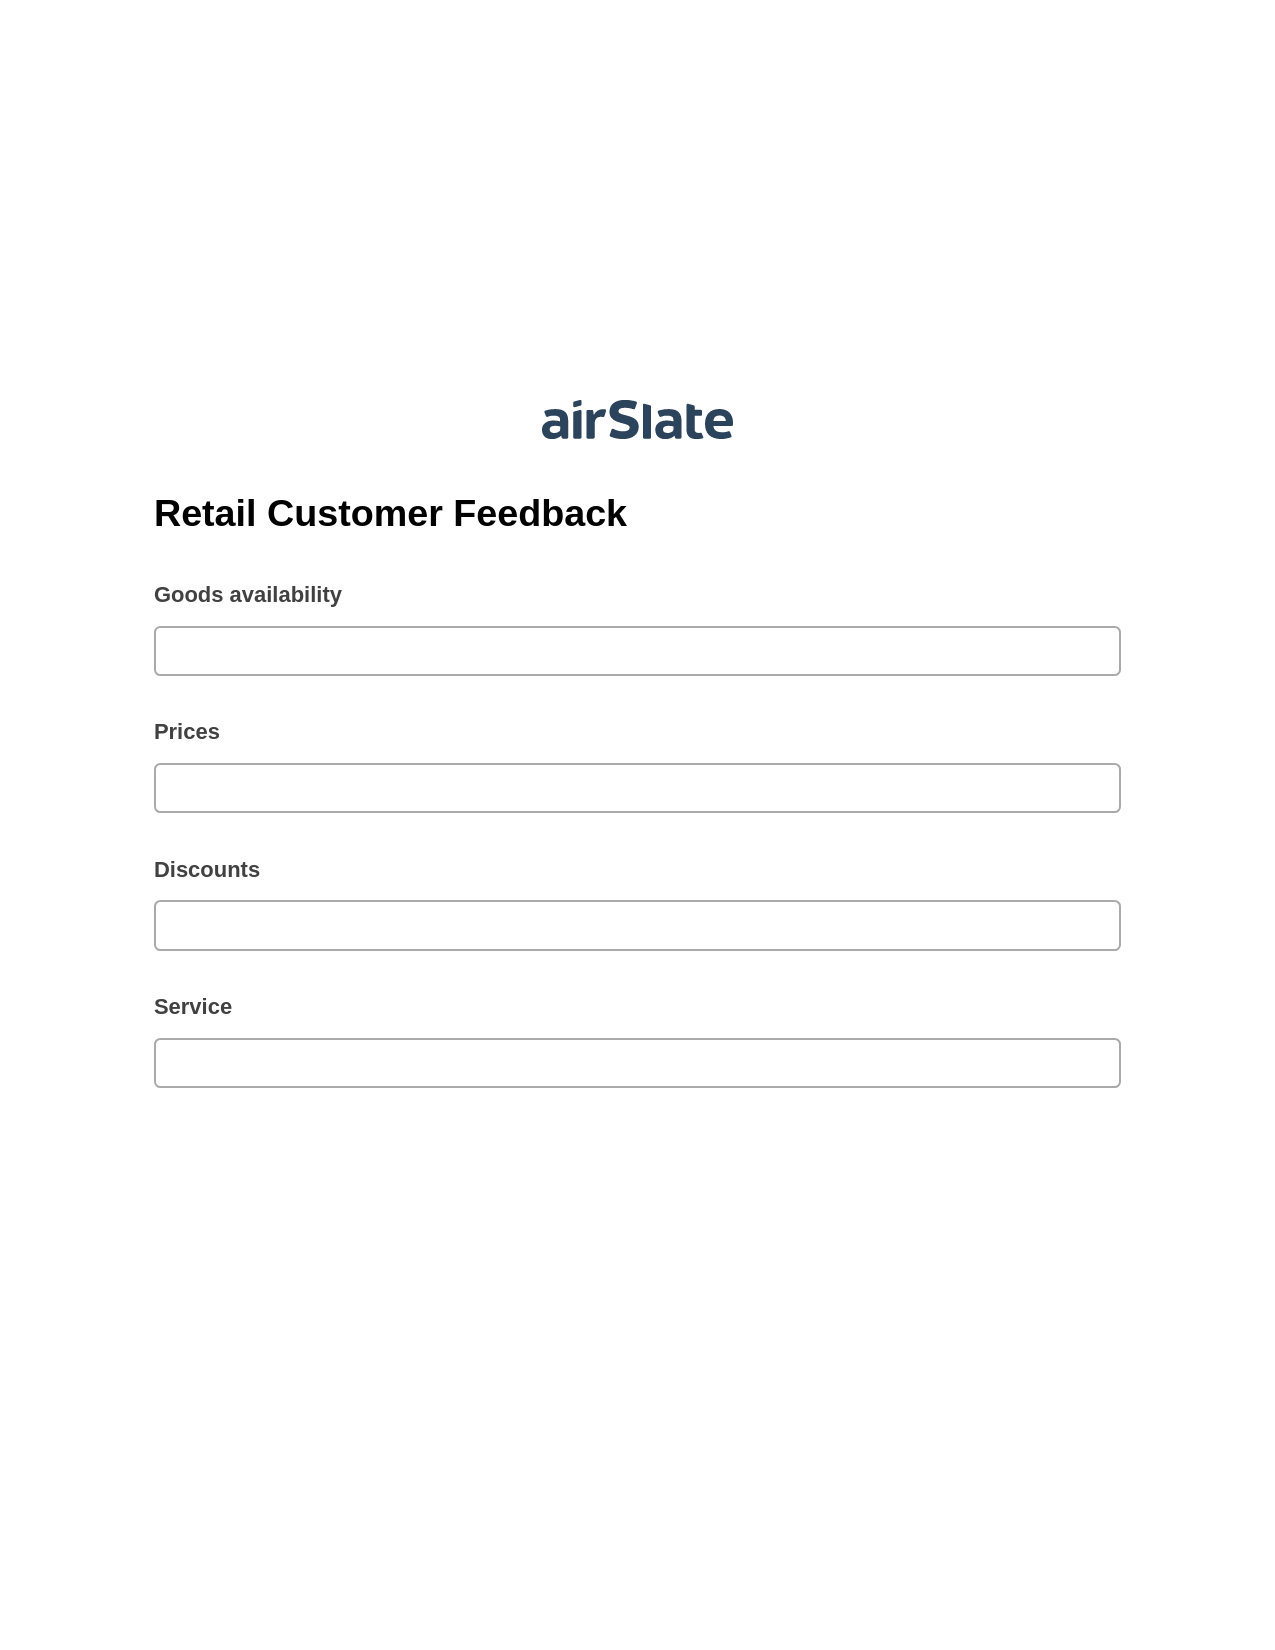 Retail Customer Feedback Pre-fill from Google Sheets Bot, Slack Notification Bot, Slack Two-Way Binding Bot